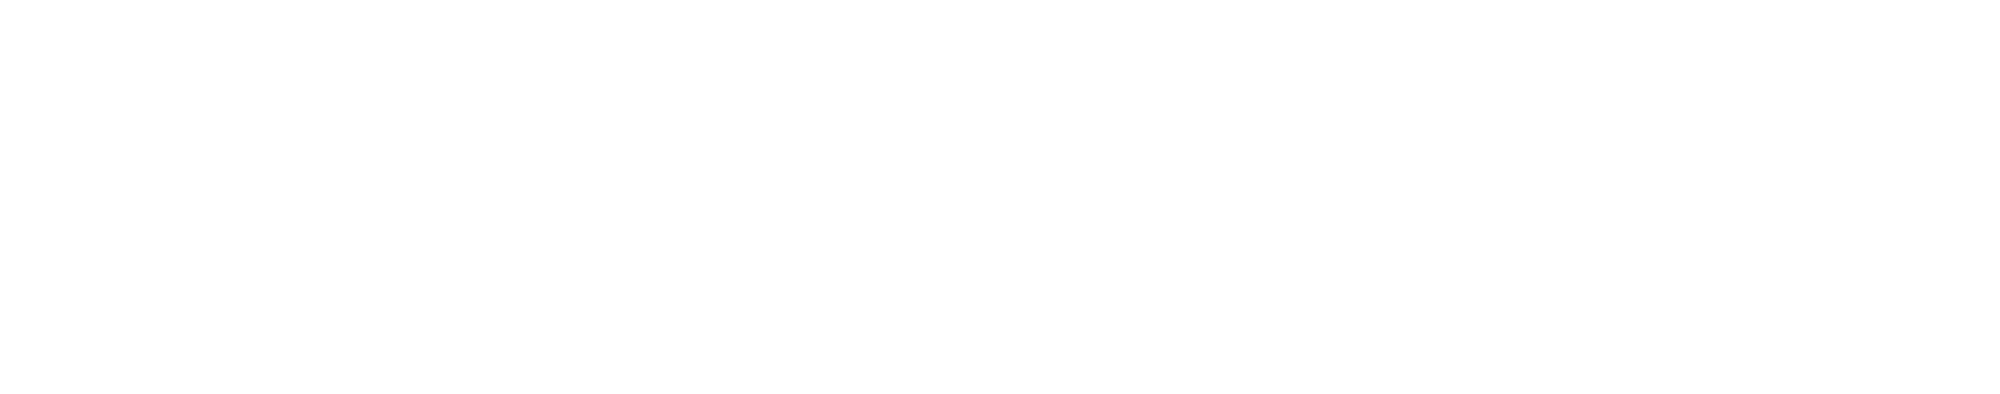 EUSAPharma and Recordati logo